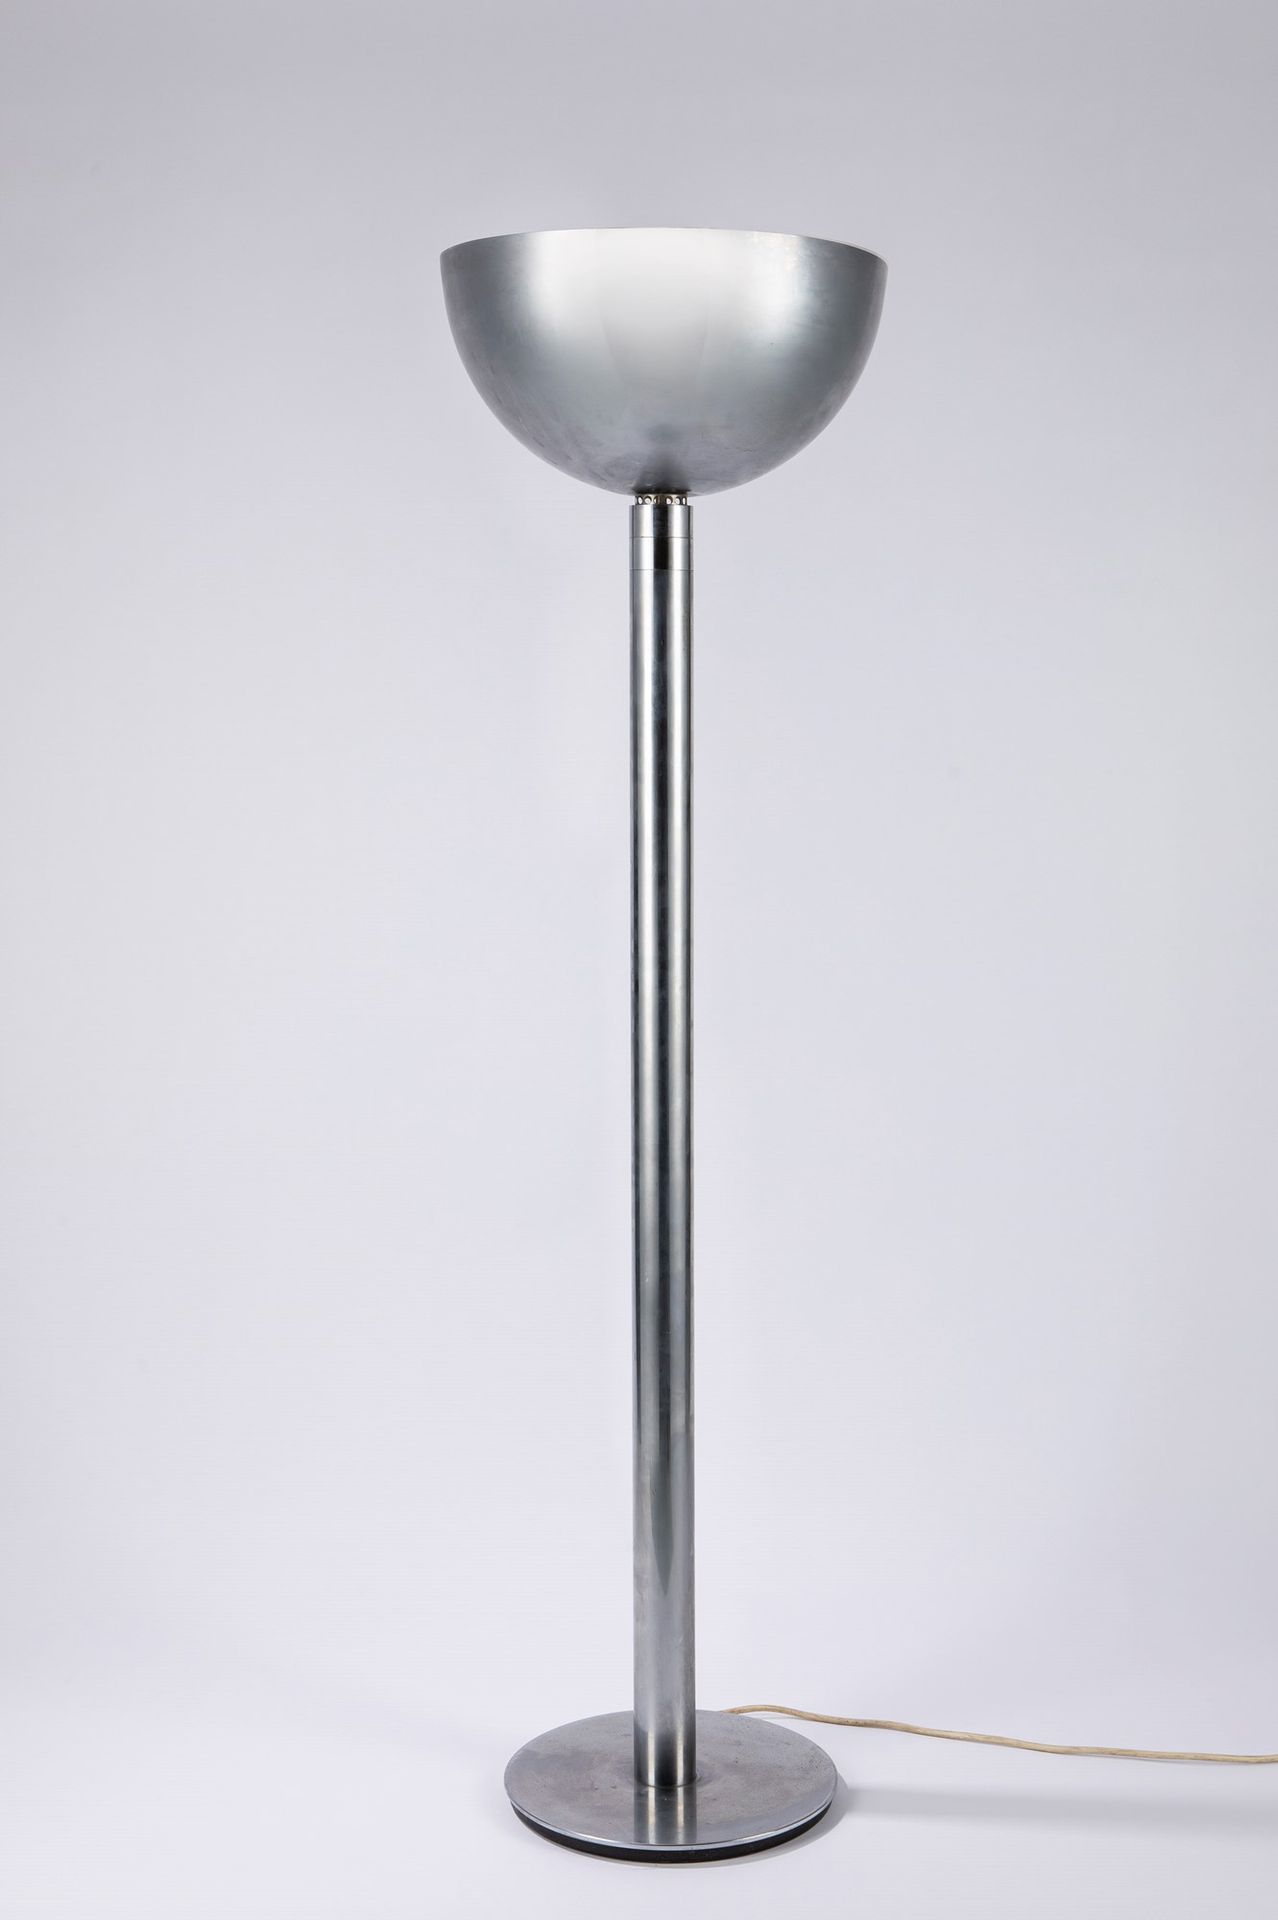 Albini Franco - Helg Franca Floor lamp model AM/AS, 1969

cm h 158x48
Chormed br&hellip;